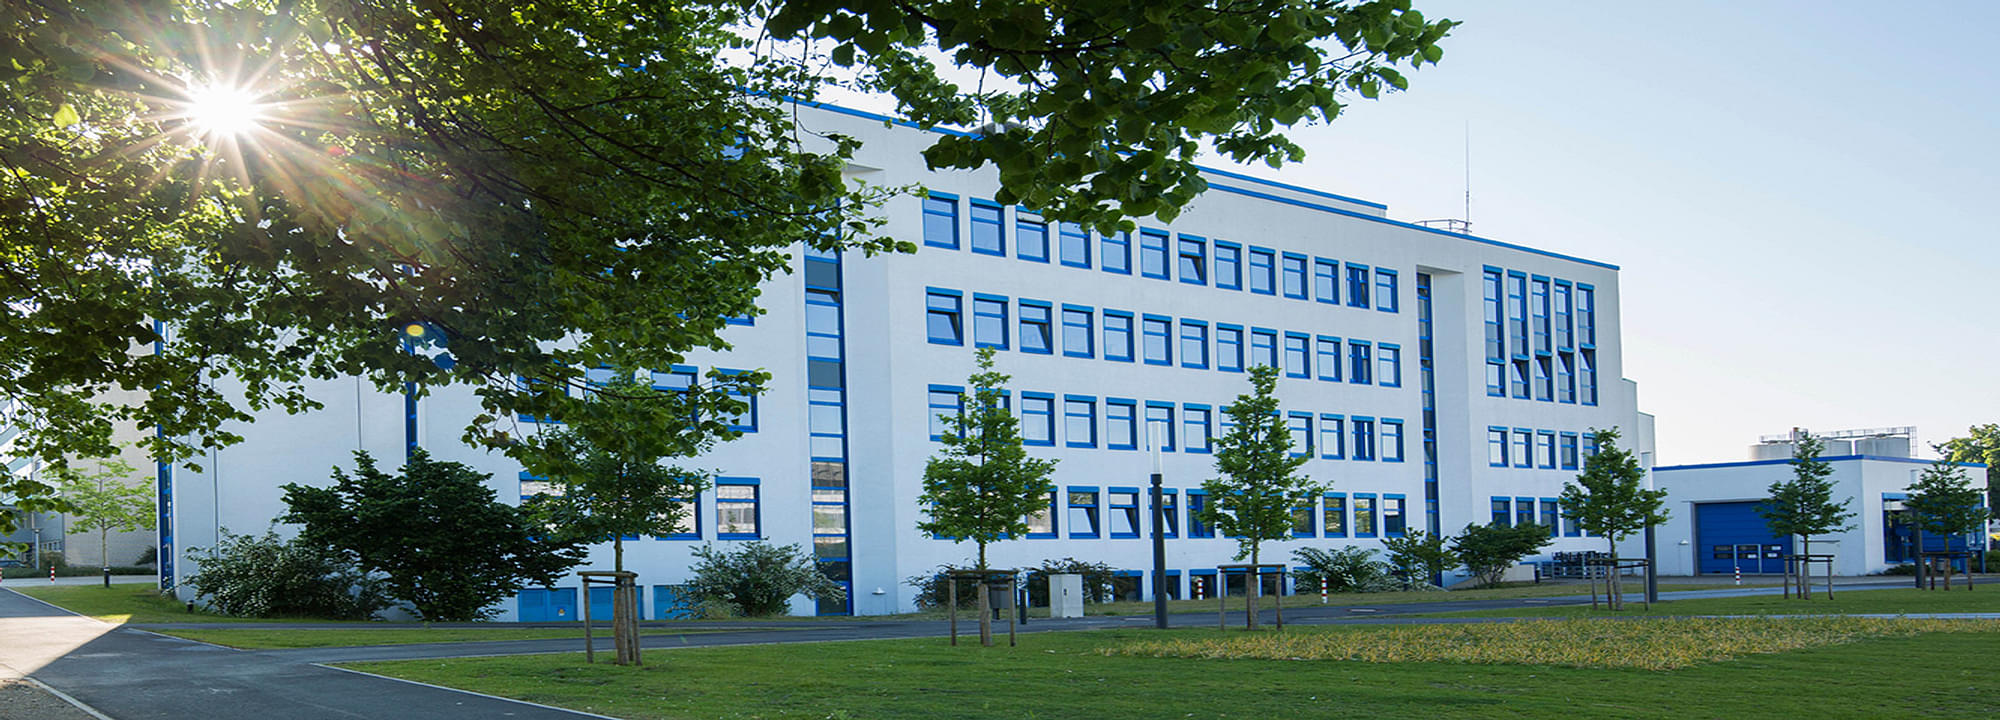 Niederrhein University Of Applied Sciences, Krefeld Courses, Fees, Ranking,  & Admission Criteria